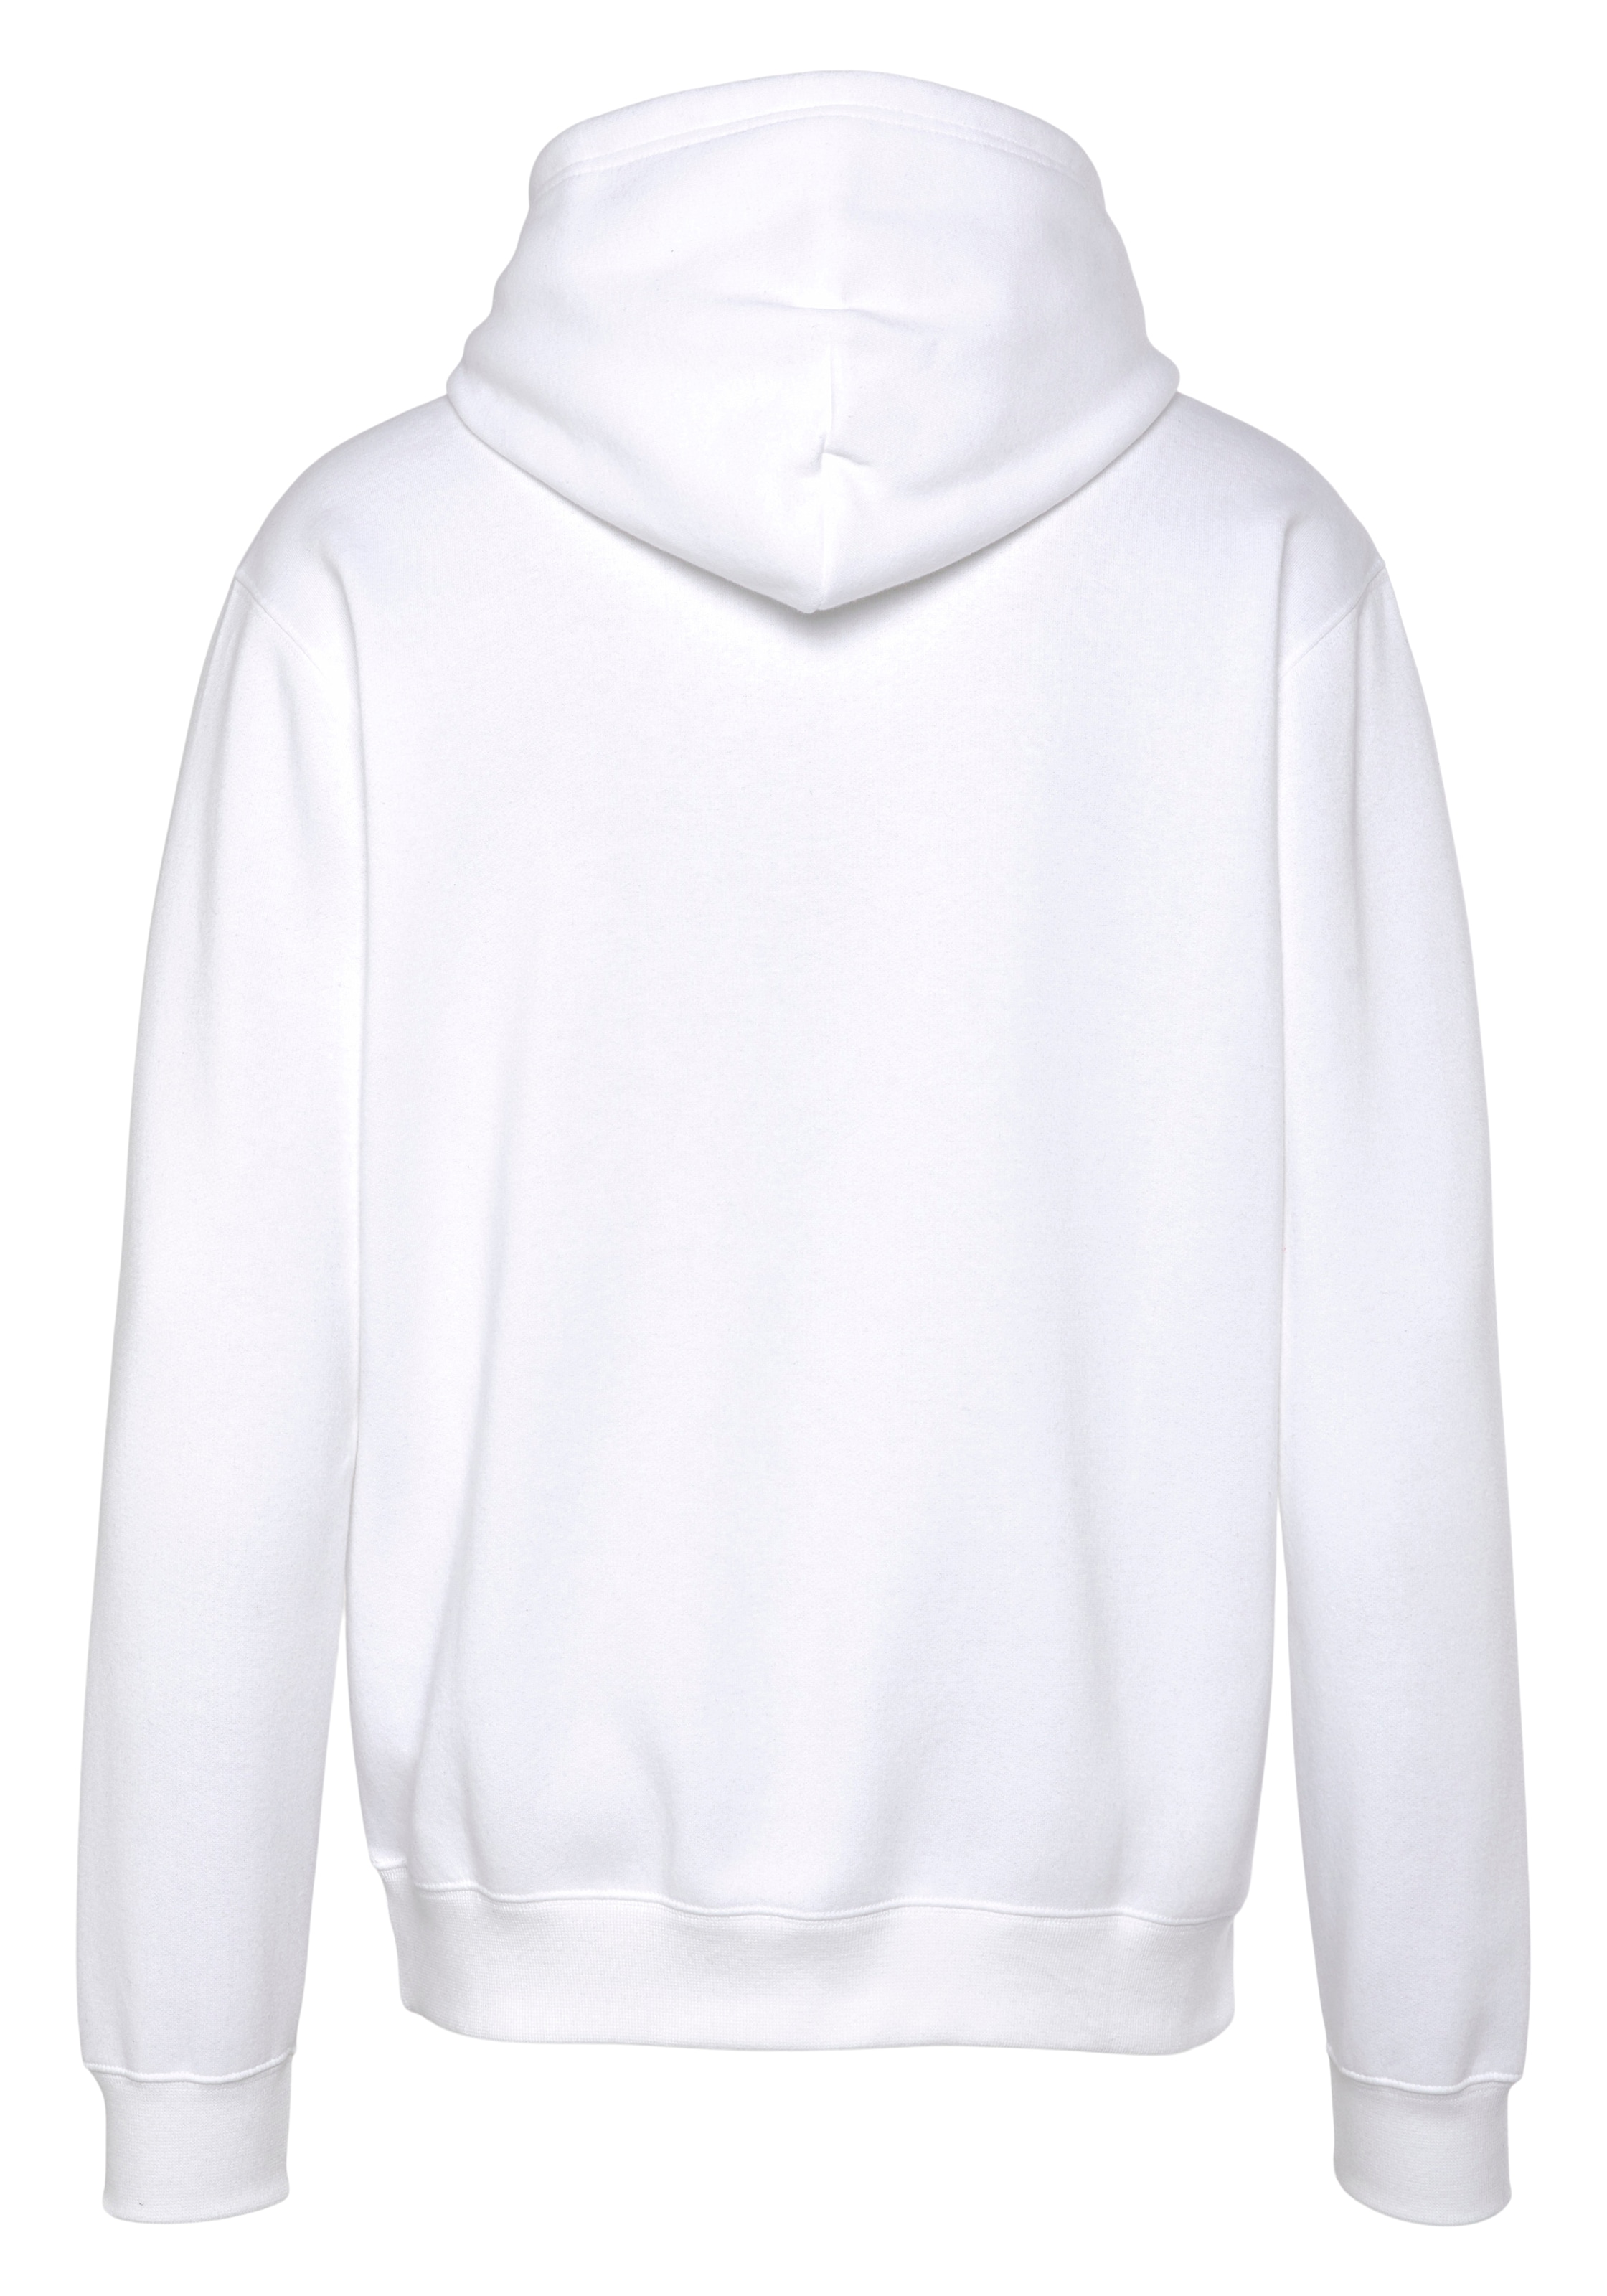 bei Hooded online »Classic OTTO Log« Champion large Sweatshirt shoppen Sweatshirt